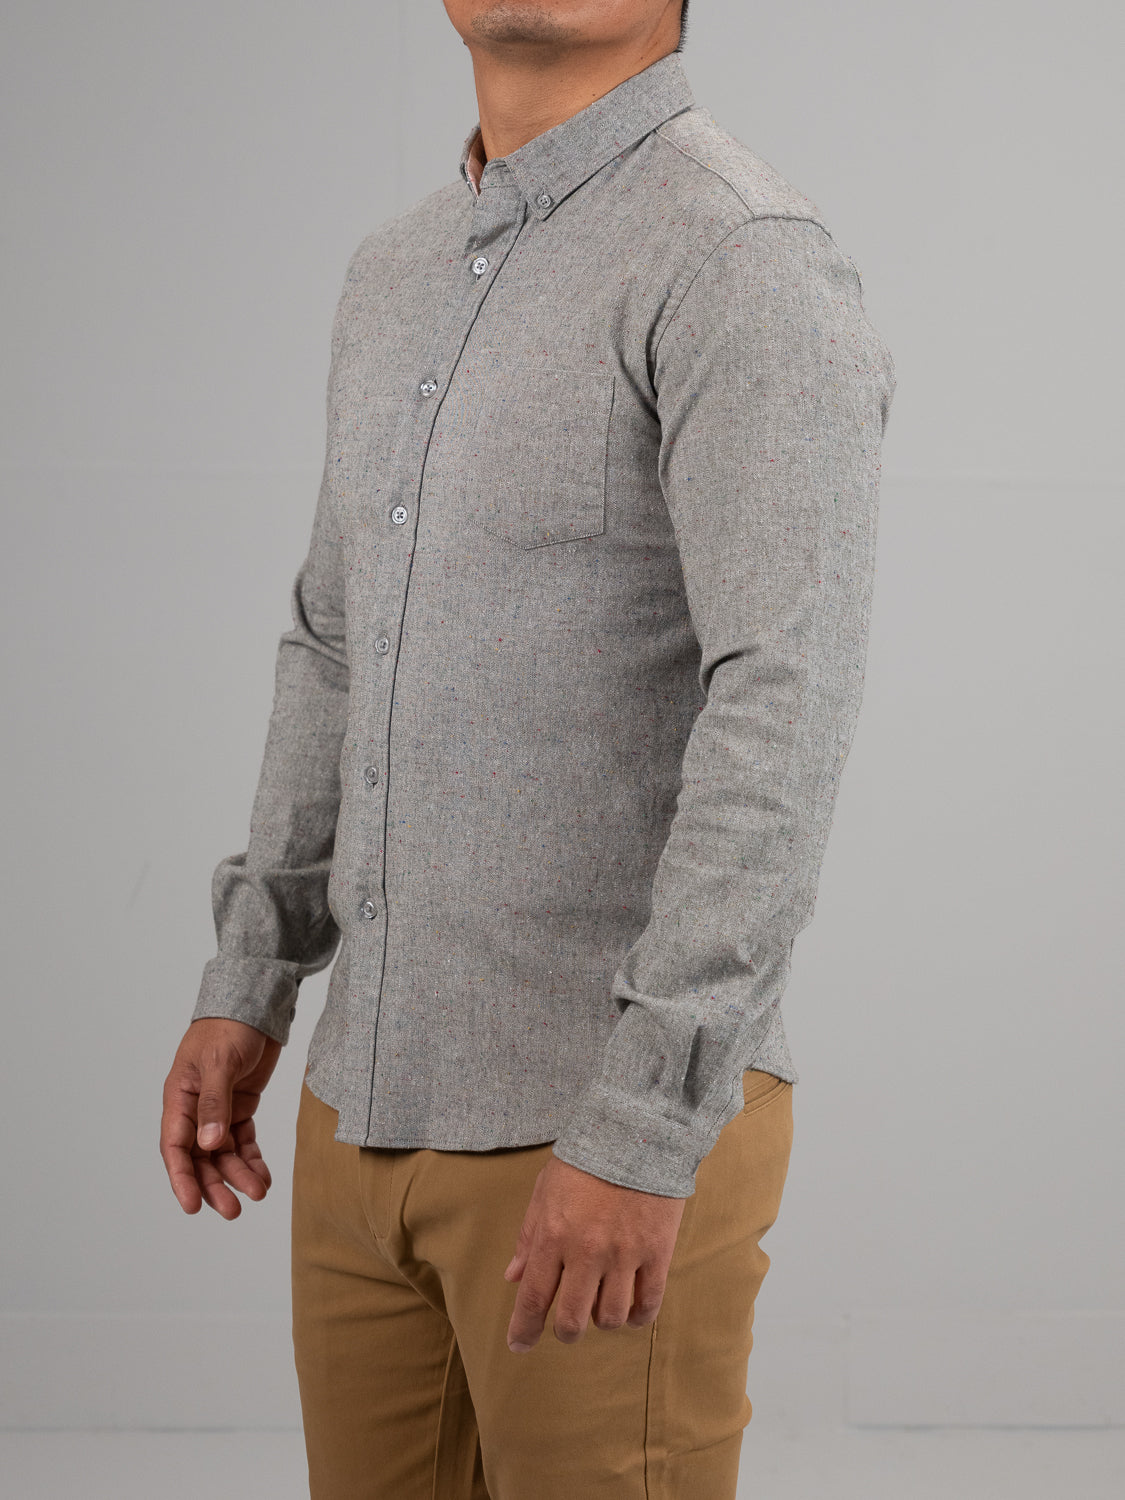 Allswell Speckled Linen Cotton Shirt